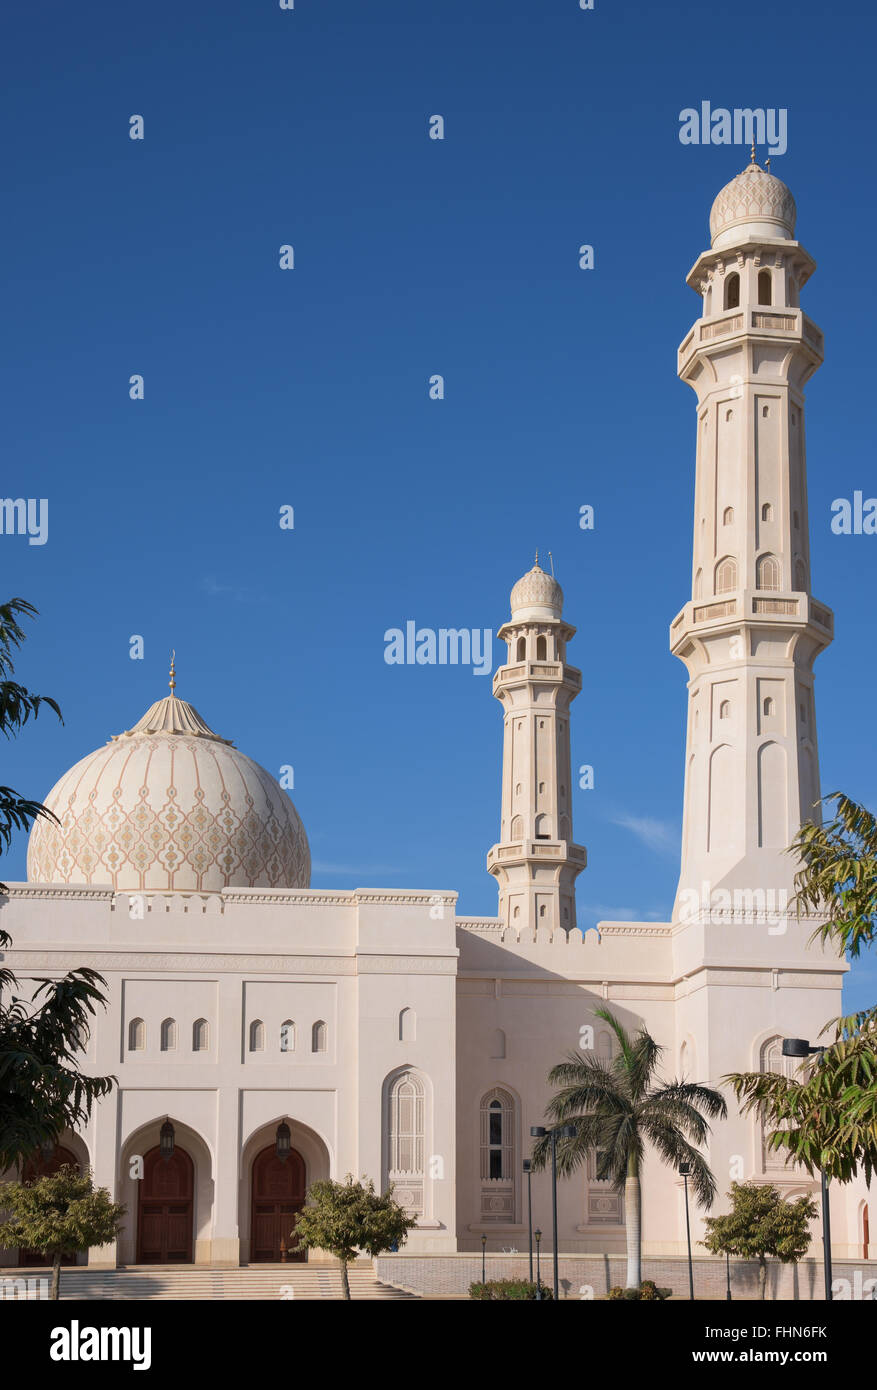 The Sultan Qaboos Grand Mosque in Salalah, Dhofar Region of Oman. Stock Photo